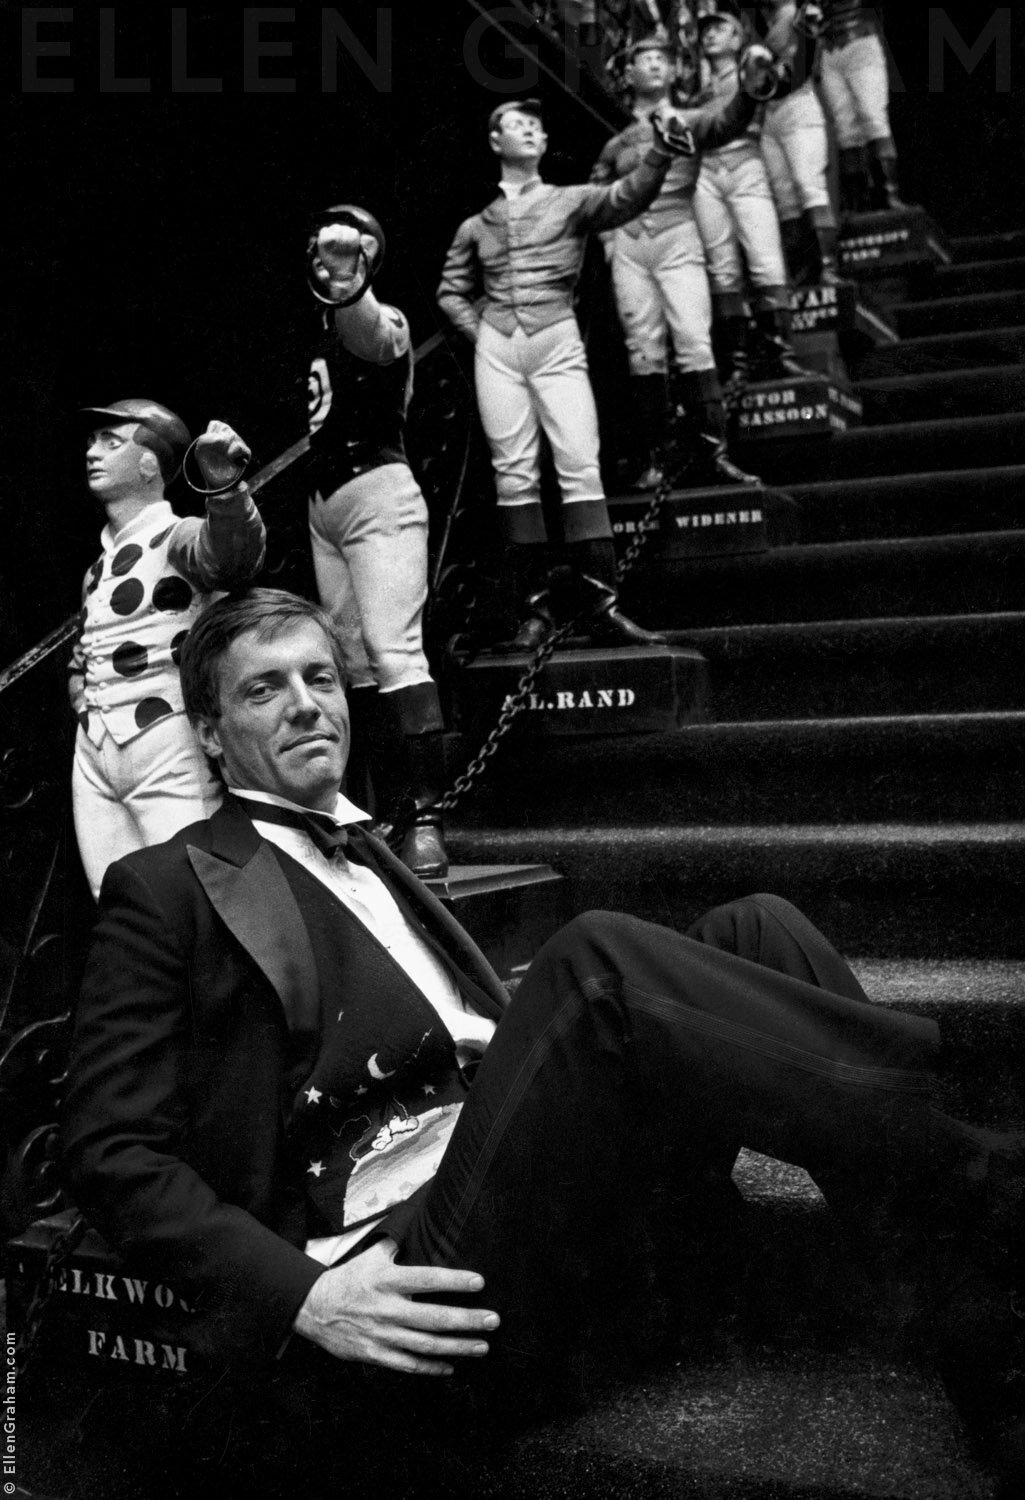 William Pitt II, 21 Club, New York, NY, 1983